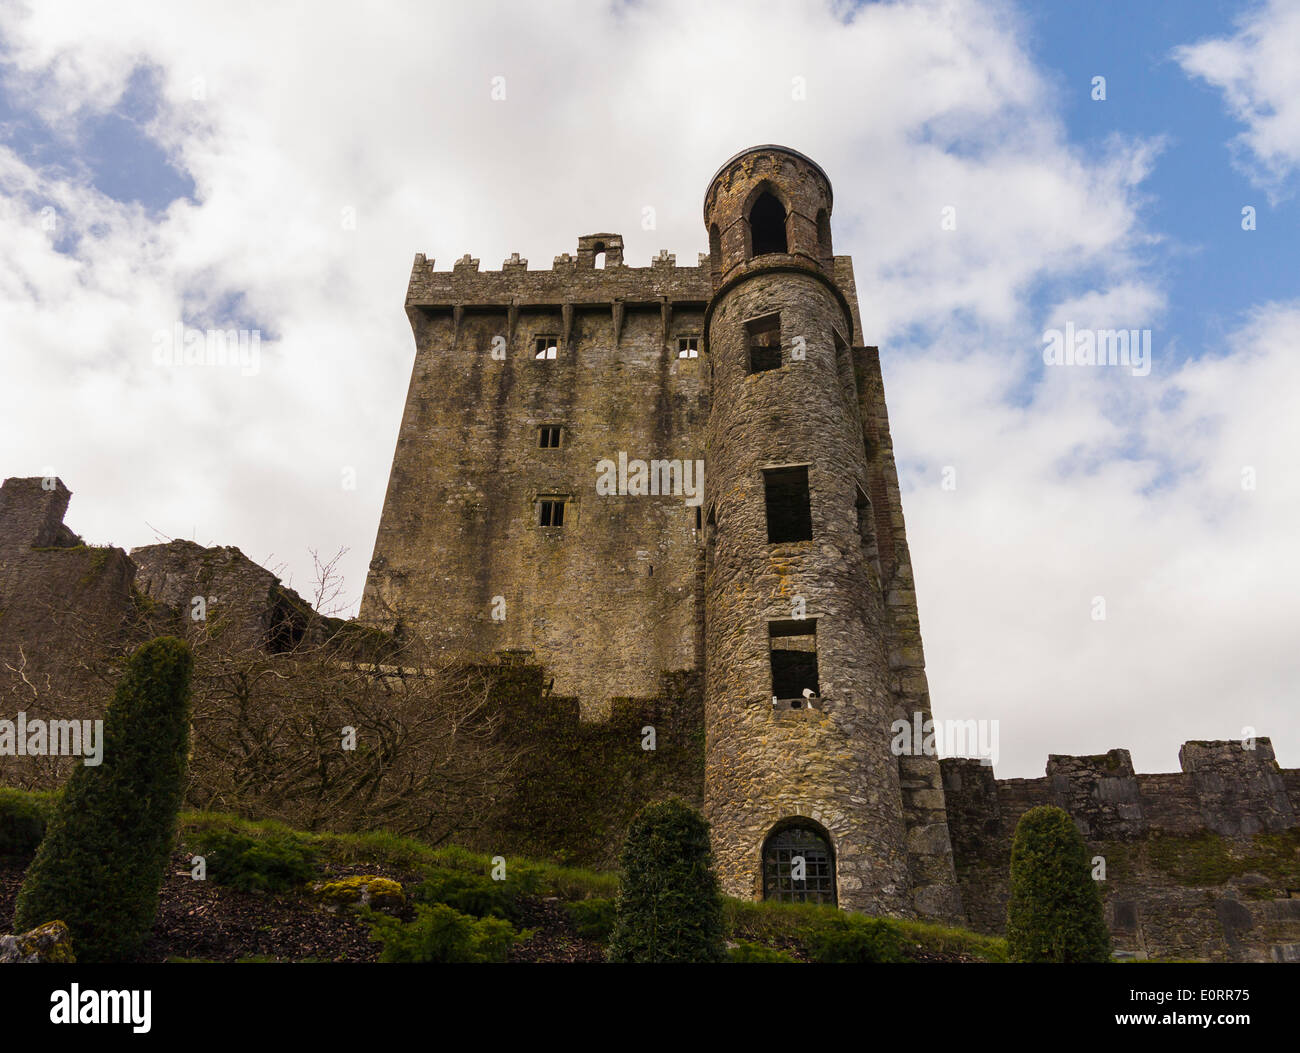 Blarney Castle im County Cork, Irland - Blick auf den alten Turm Stockfoto